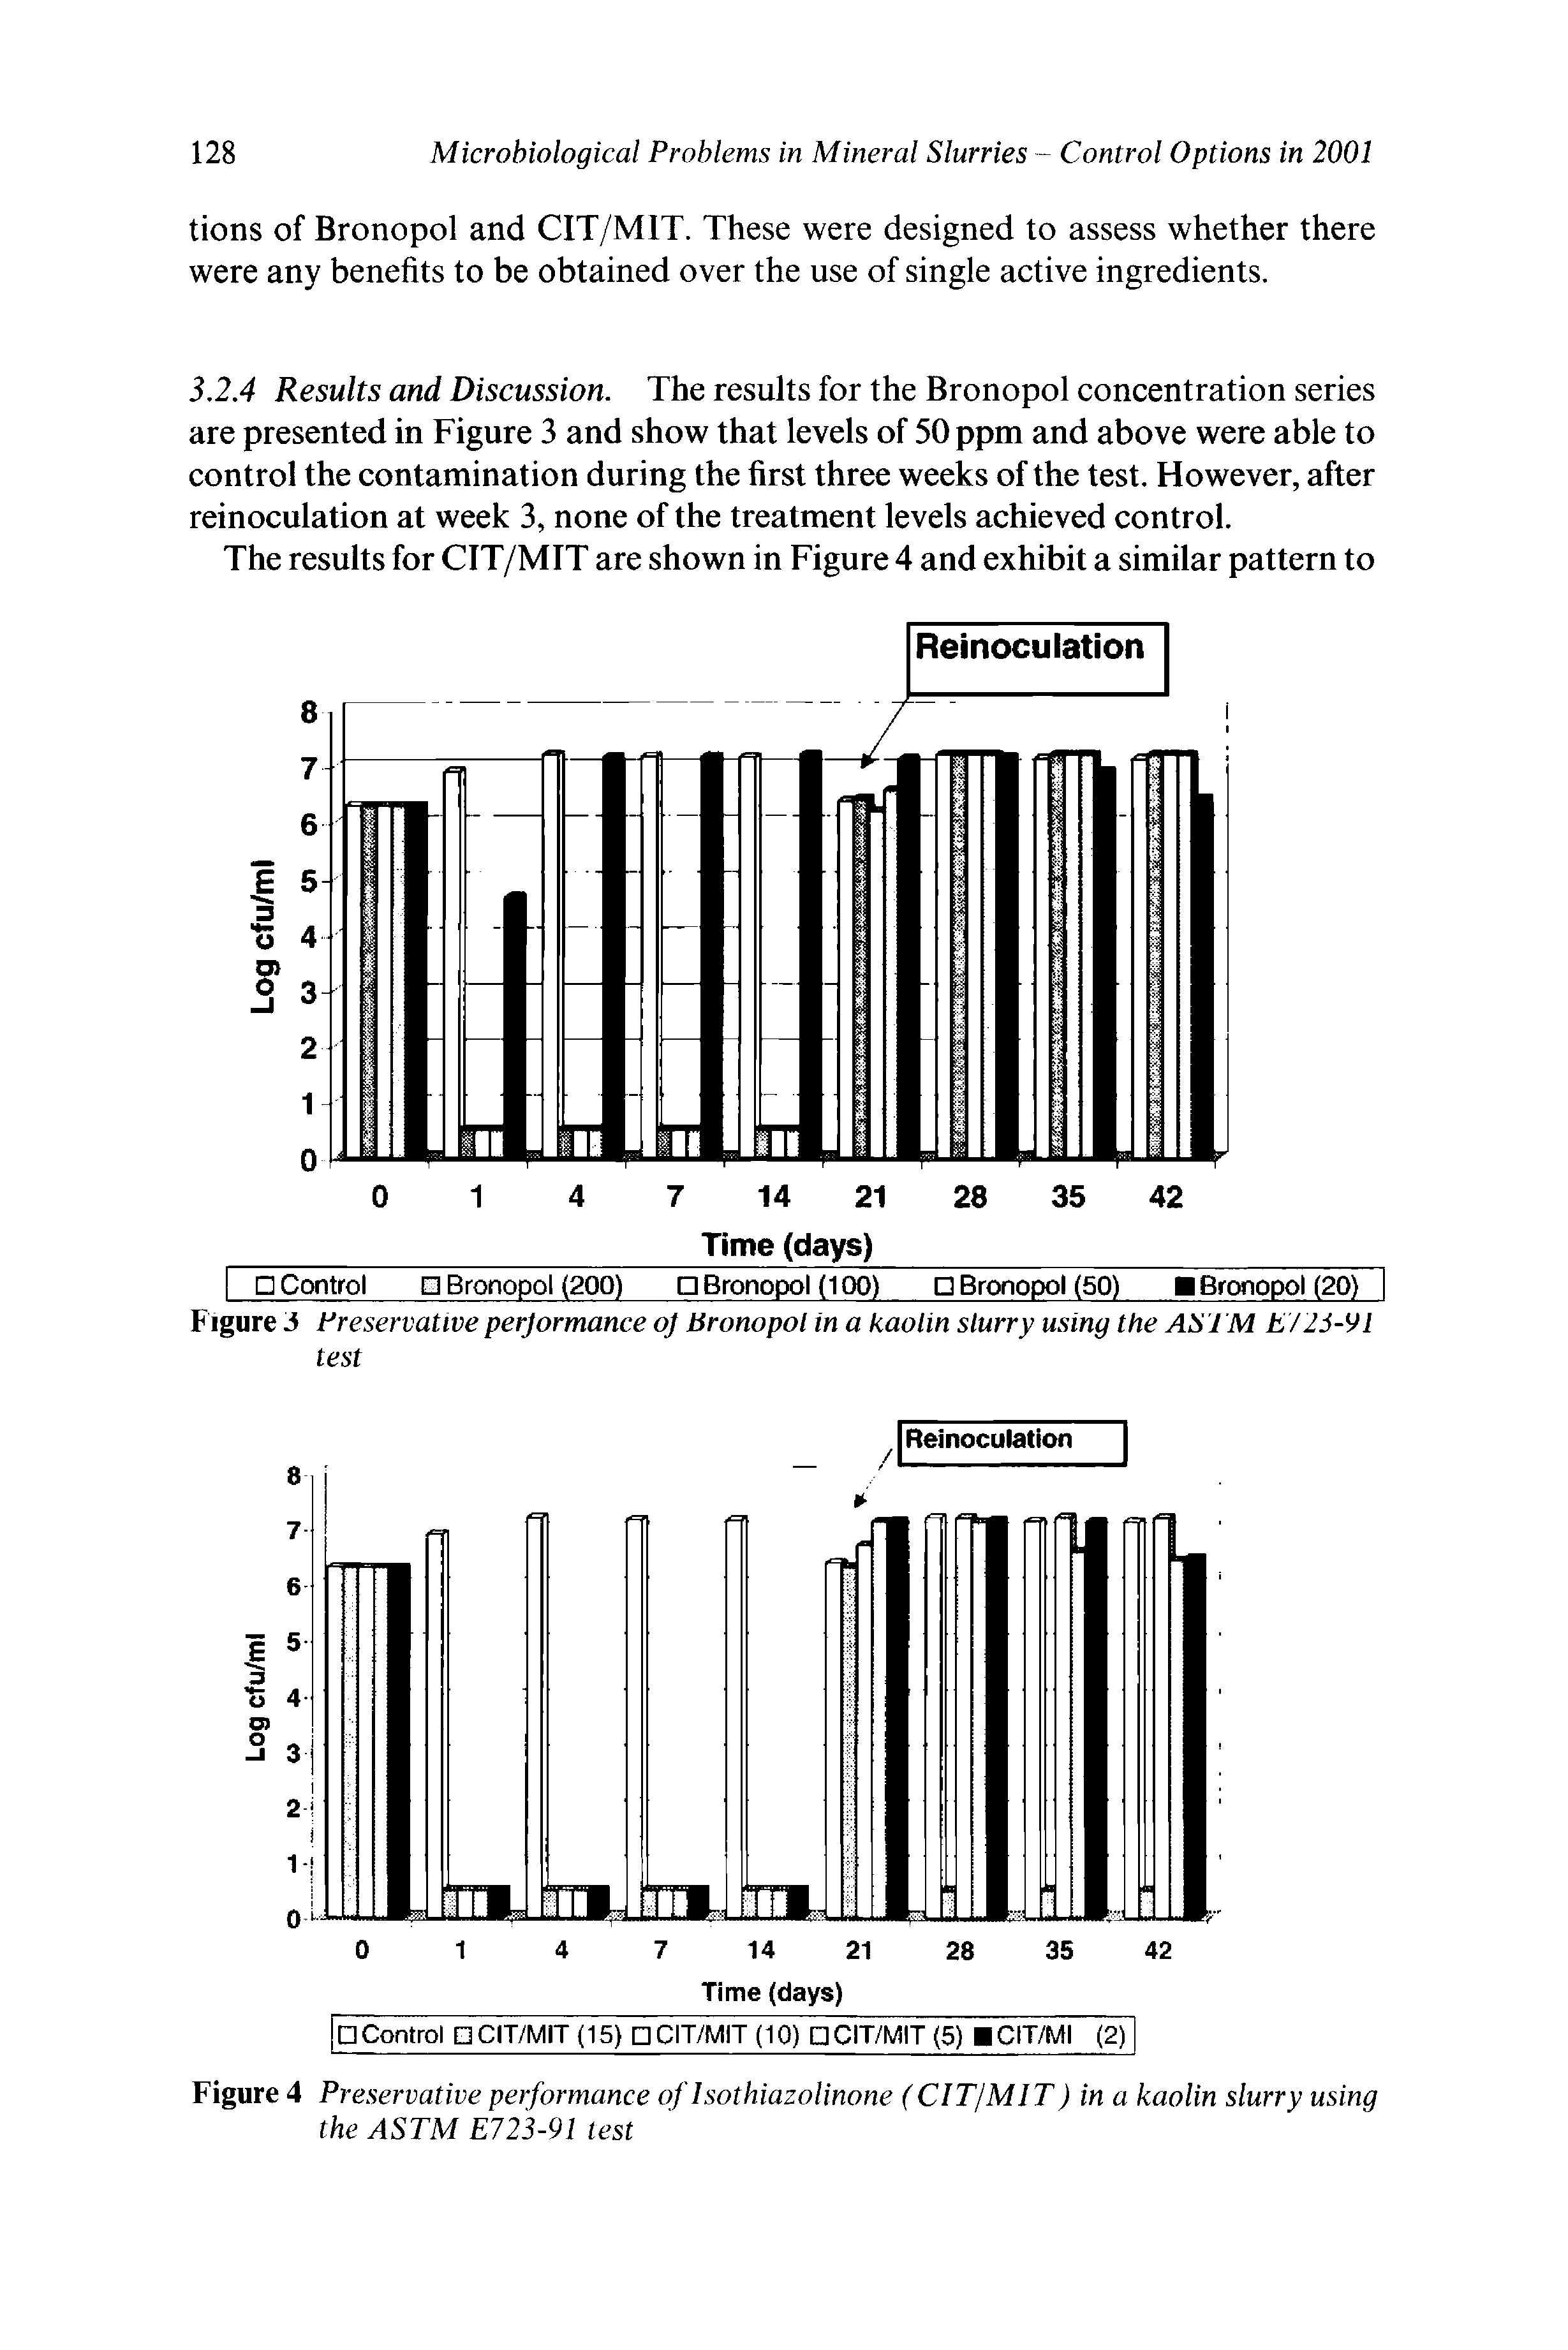 Figure 3 Preservative perjormance oj tSronopol in a kaolin slurry using the ASTM E/23-91 test...